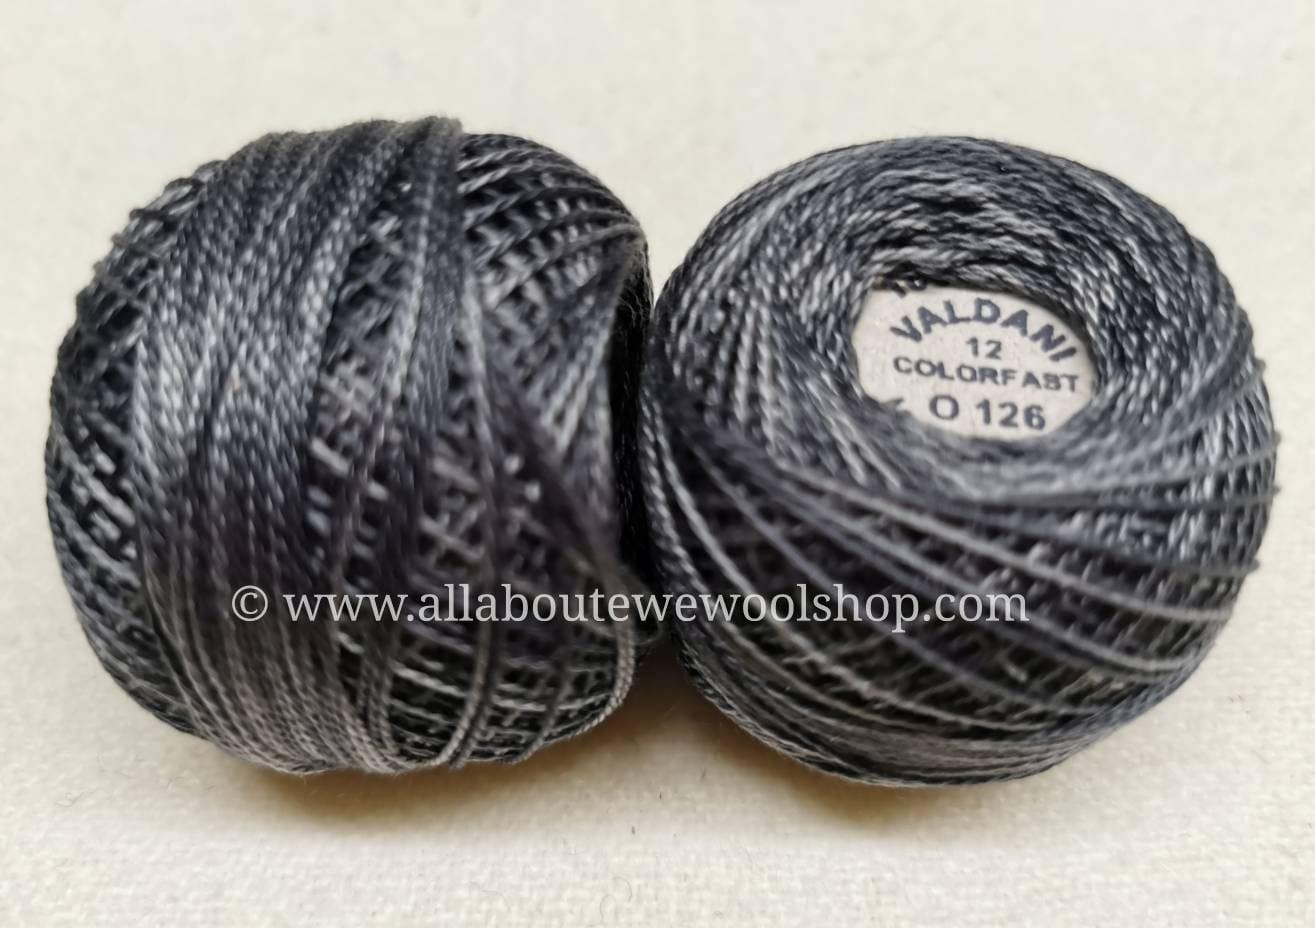 O126 #12 Valdani Pearl/Perle Cotton Thread - All About Ewe Wool Shop